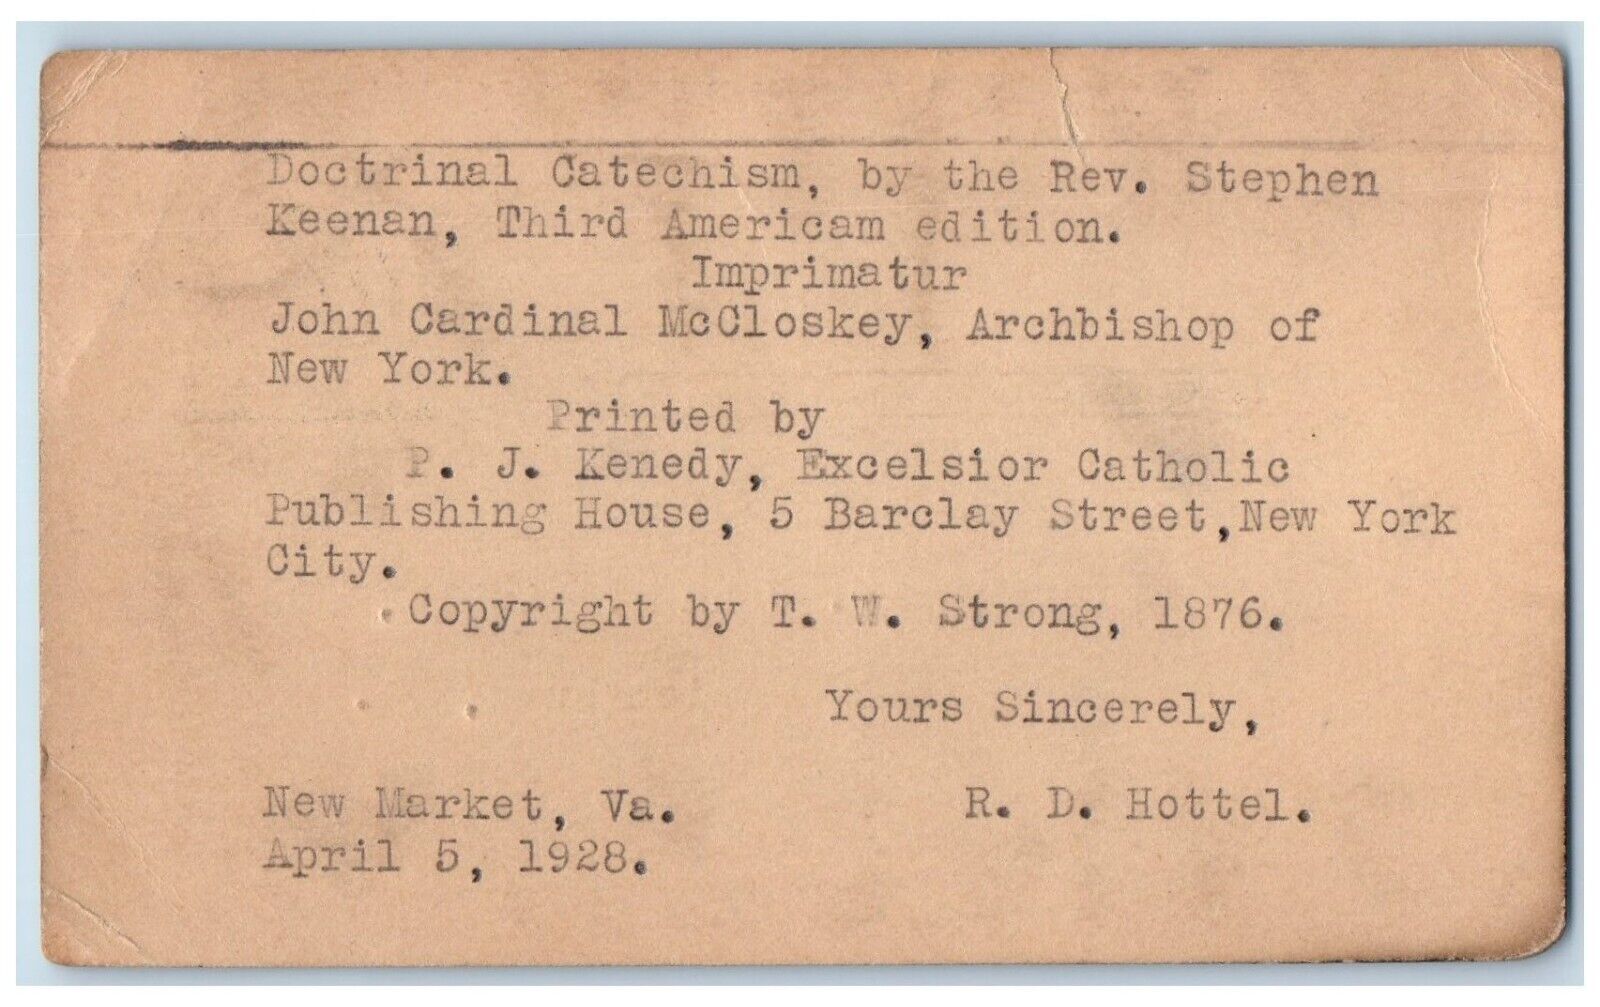 1928 Doctrinal Catechism By Reve Stephen Keenan New Market VA Postal Card